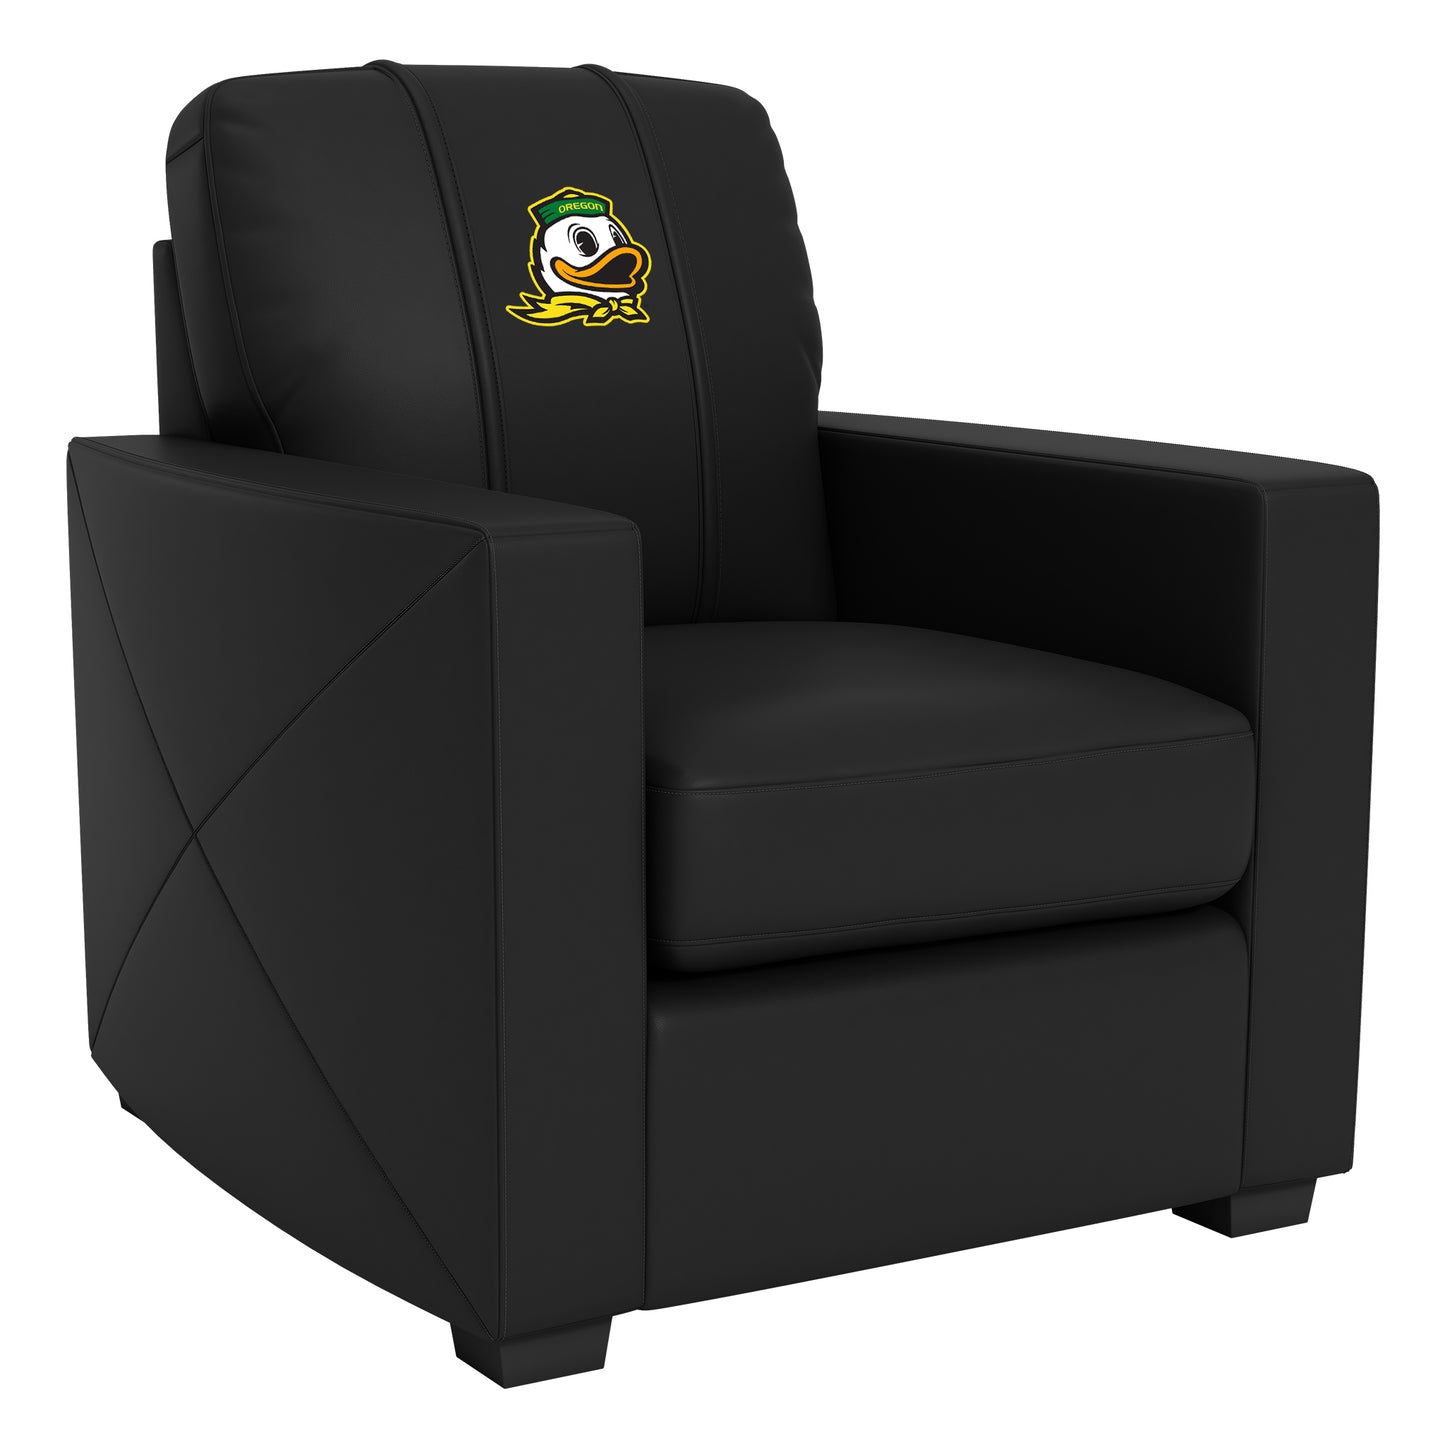 Silver Club Chair with Oregon Ducks Mascot Logo